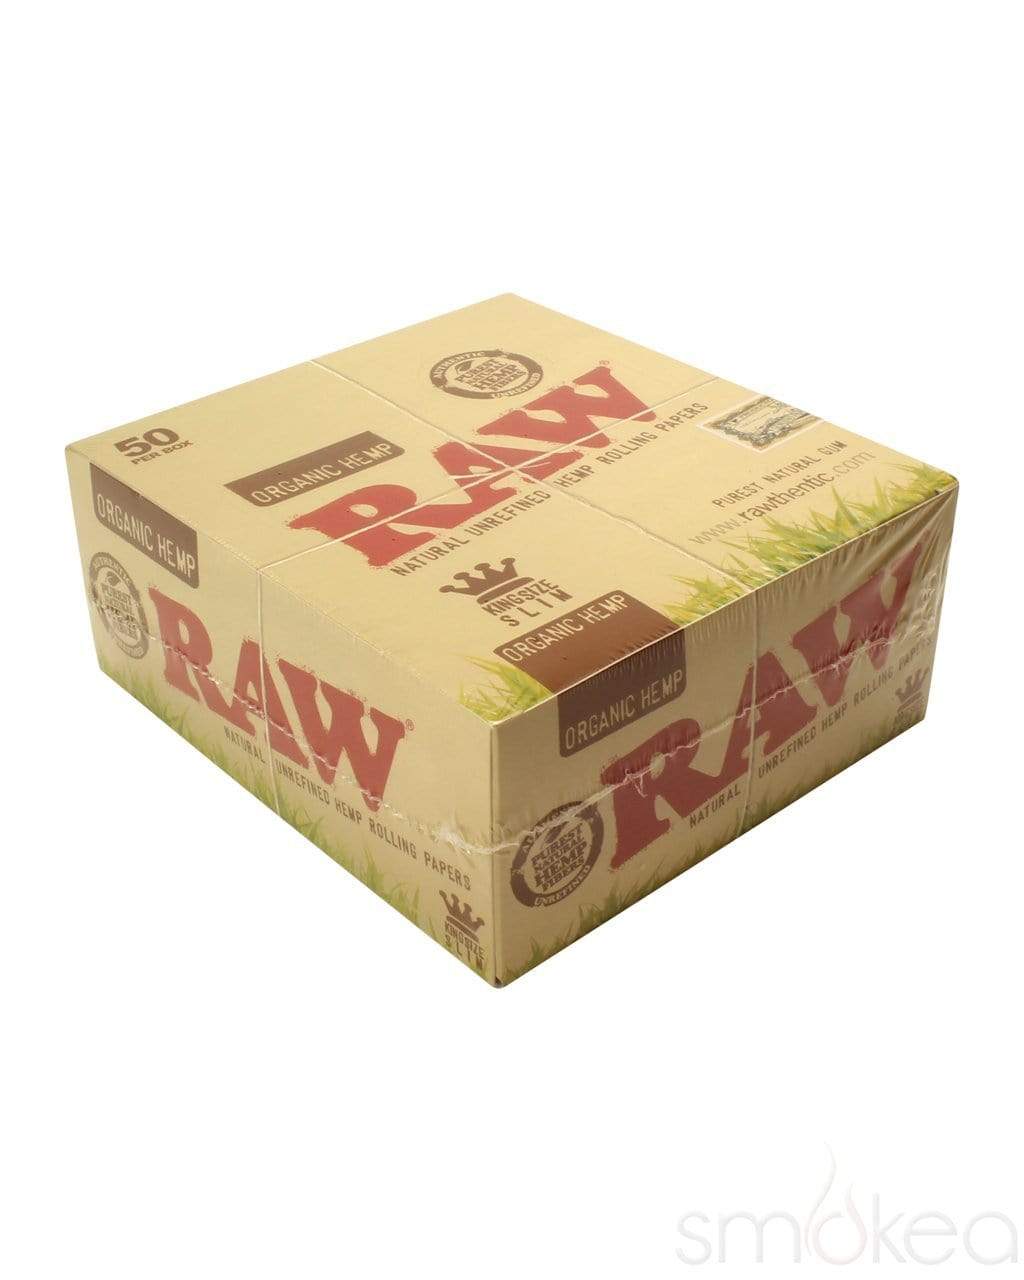 RAW Organic Hemp - Cartine King Size Slim - GrowLab